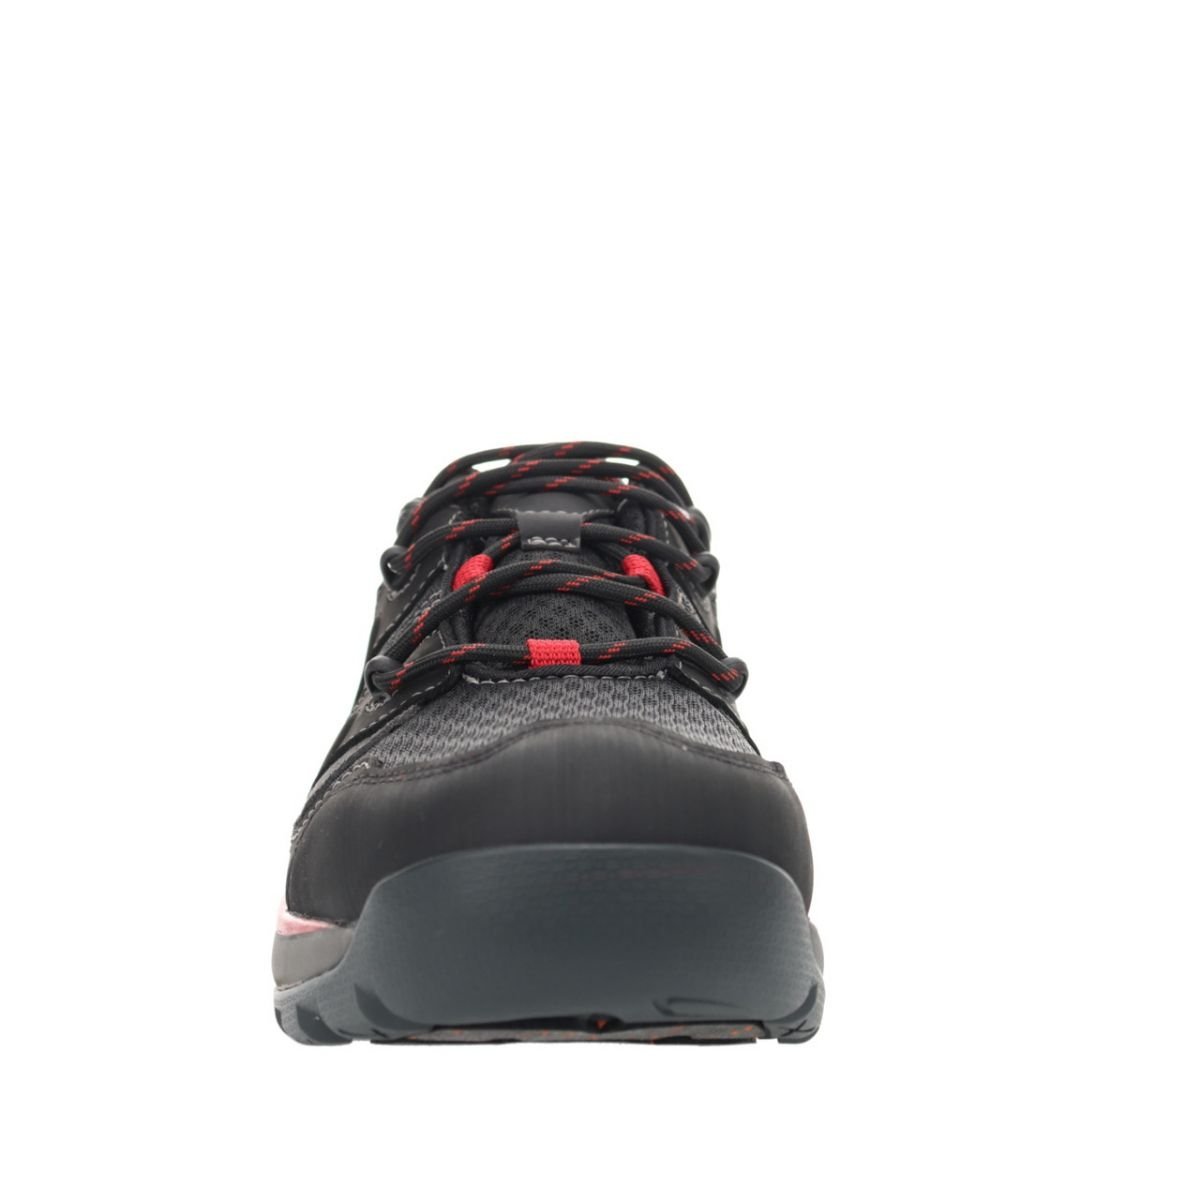 Propet Men's Vercors Hiking Shoe Black/Red - MOA002SBRD BLACK/RED - BLACK/RED, 9 XX-Wide